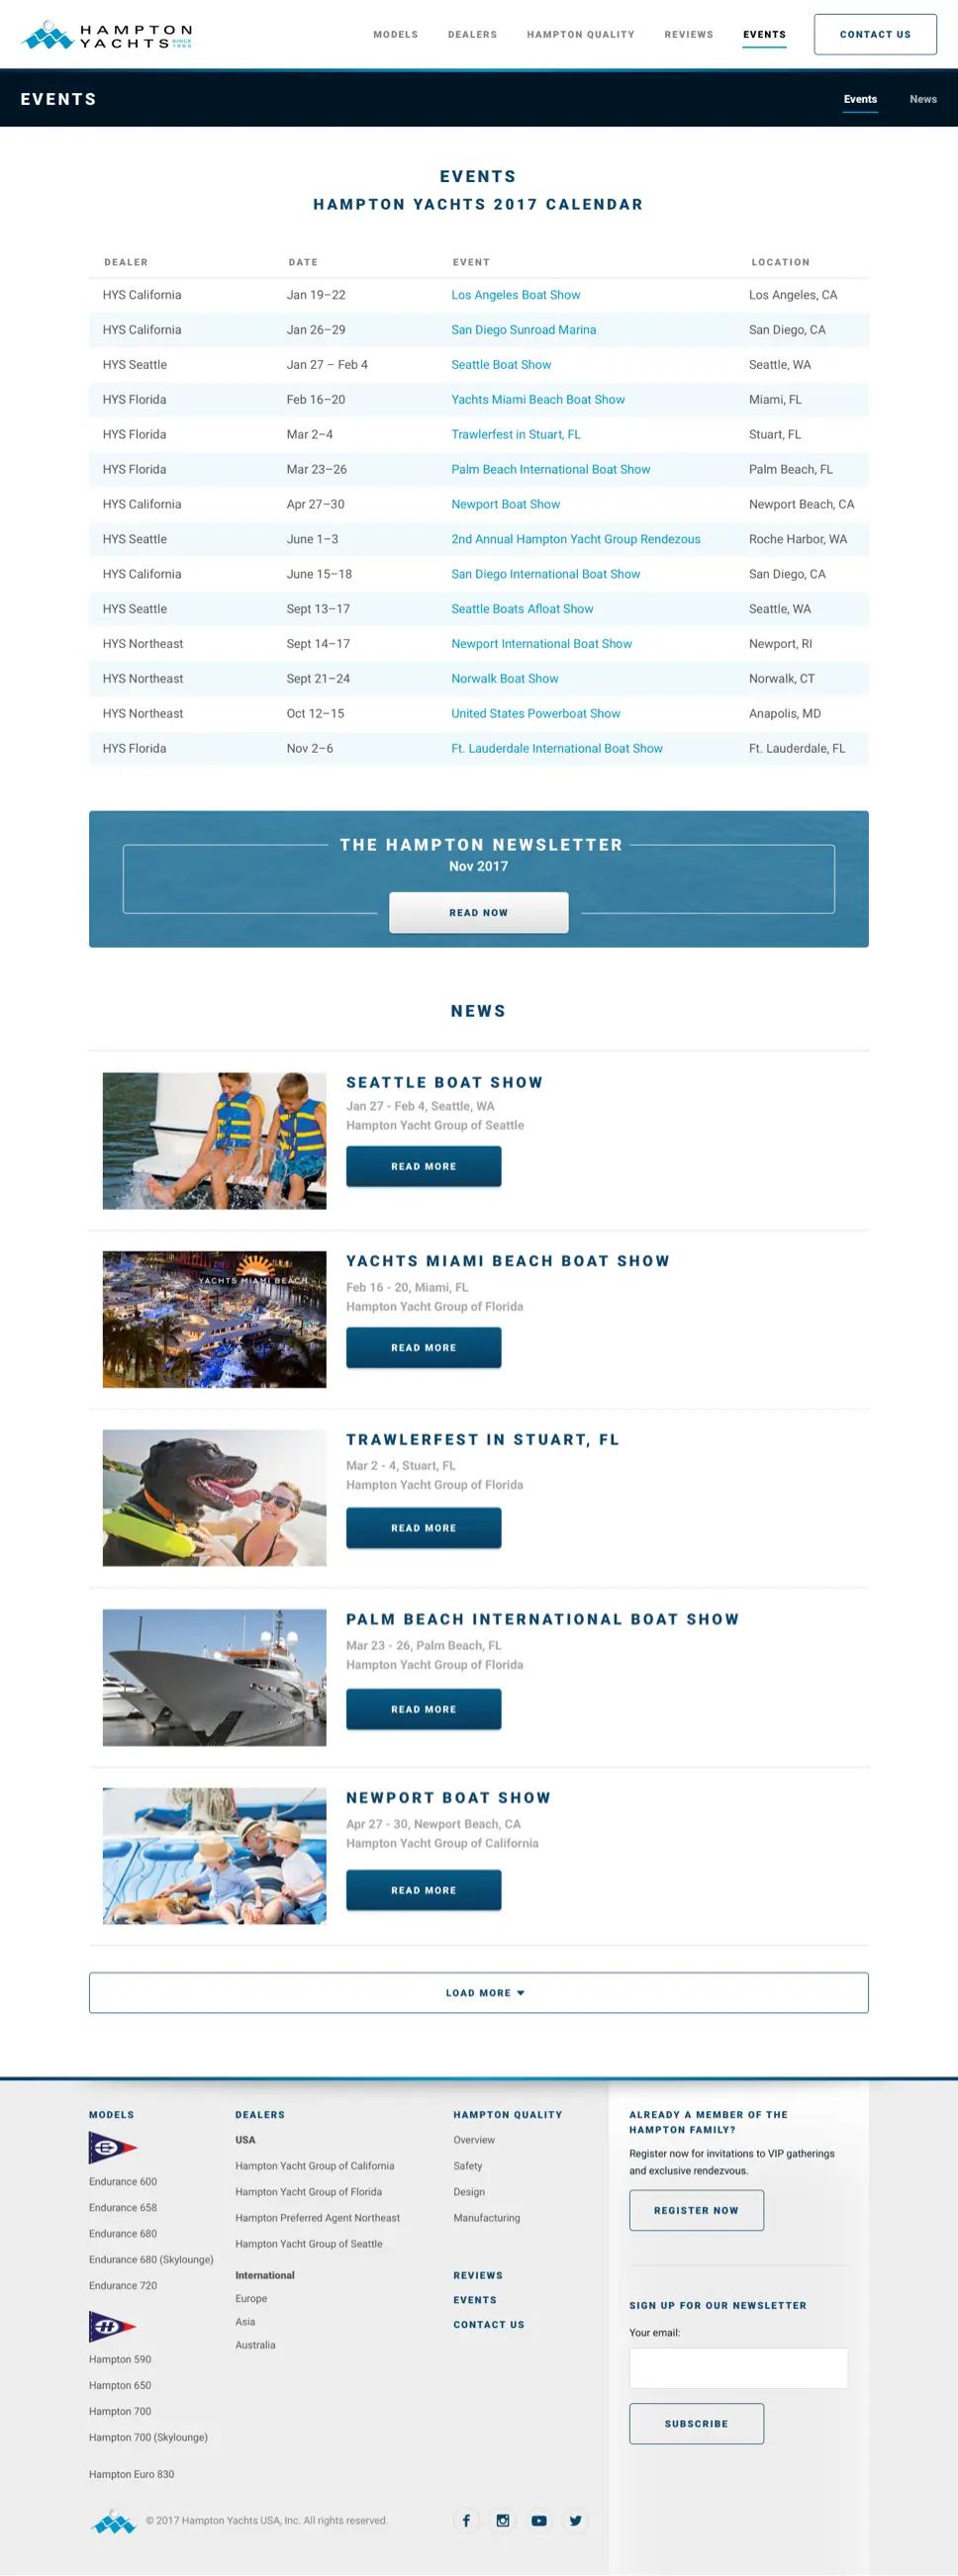 A screenshot of Hampton Yachts' "Events" page.